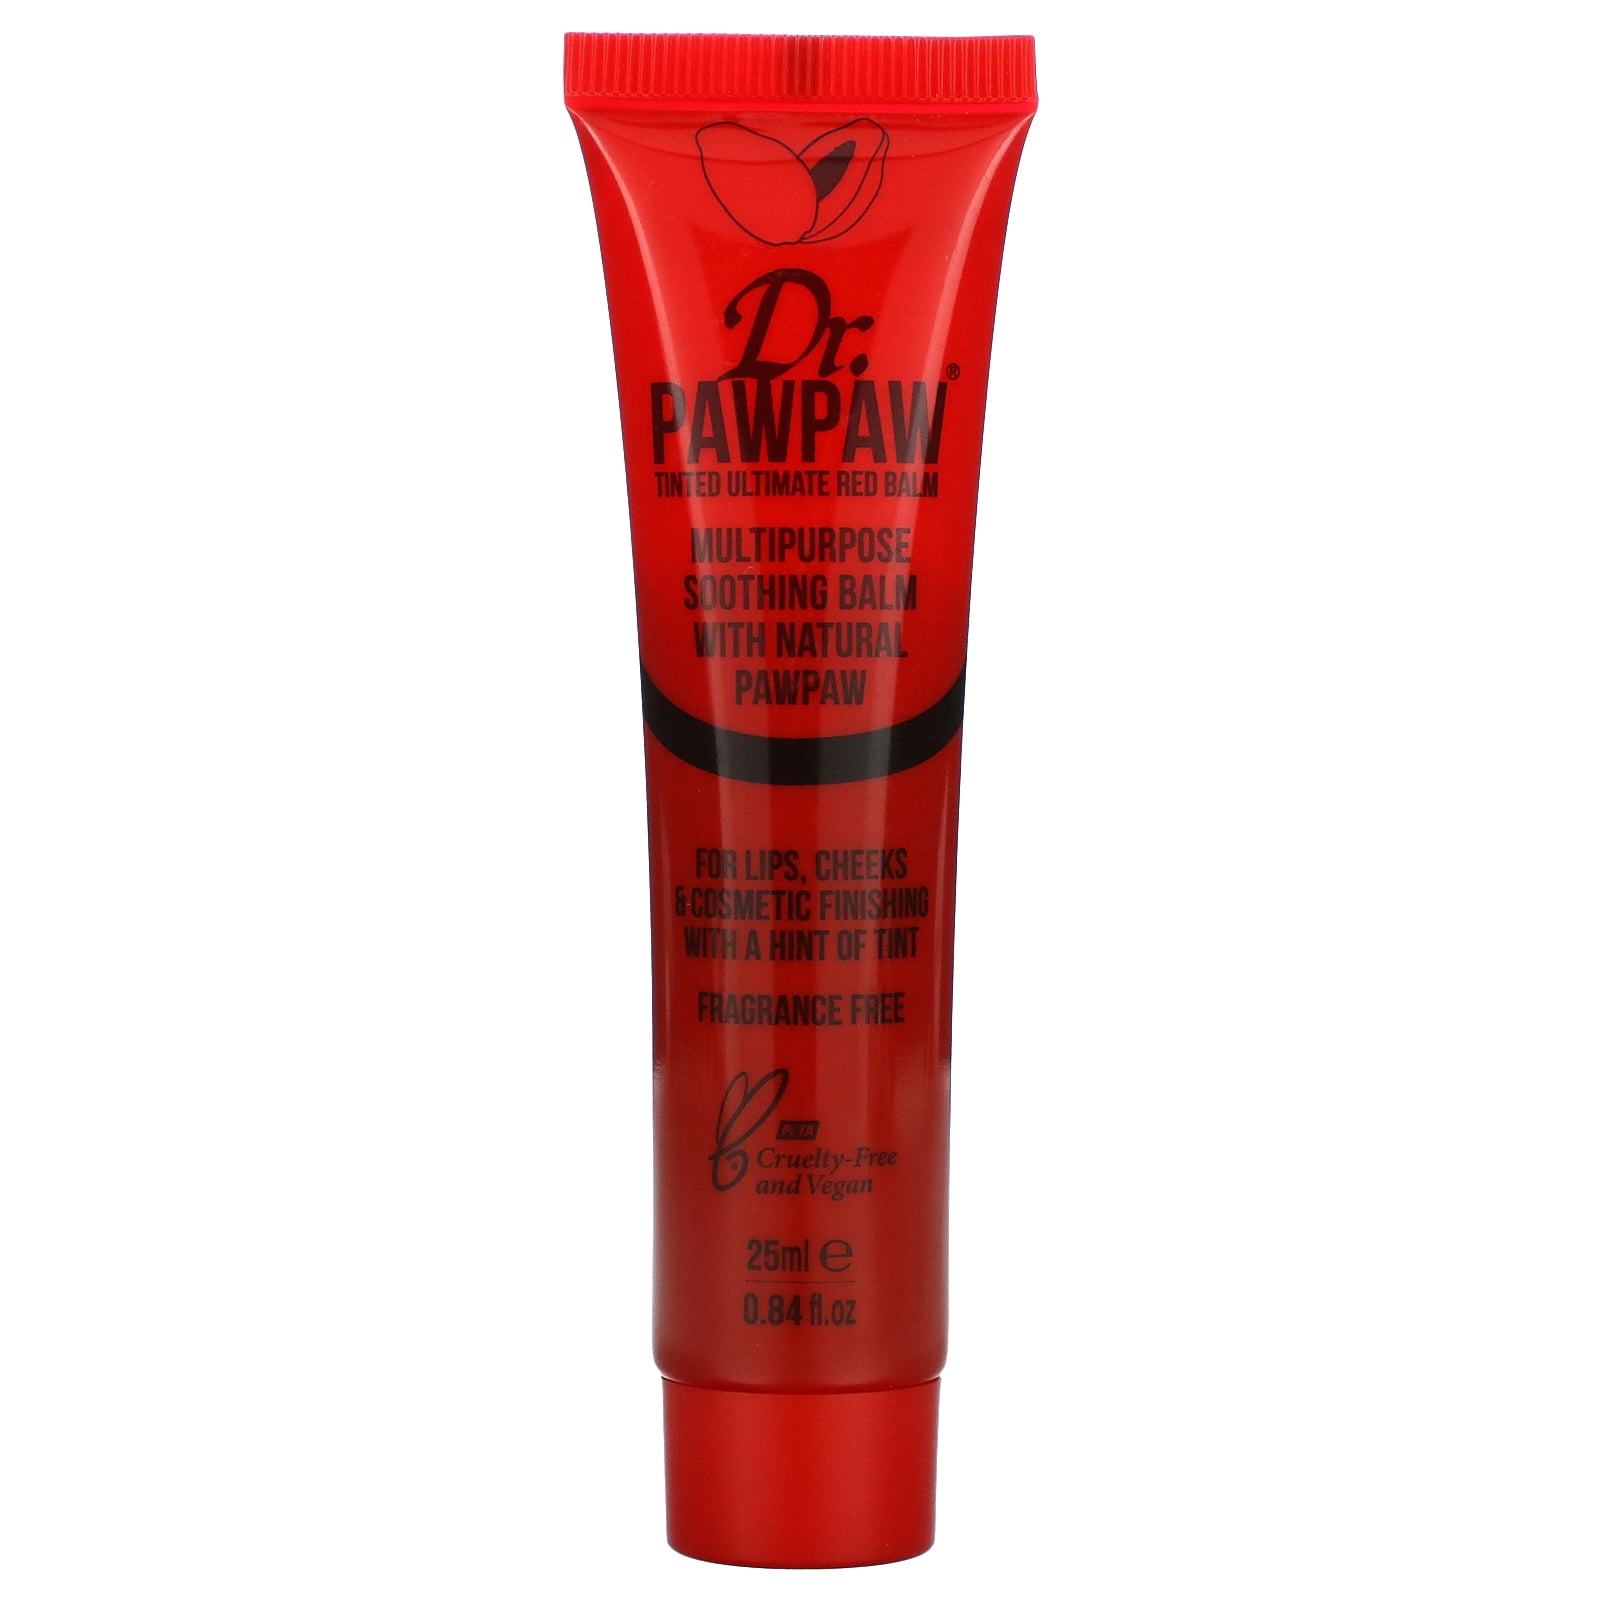 Dr. PAWPAW Multipurpose Balm with Natural PawPaw, Tinted Ultimate Red, 0.84 fl oz (25 ml) - Walmart.com